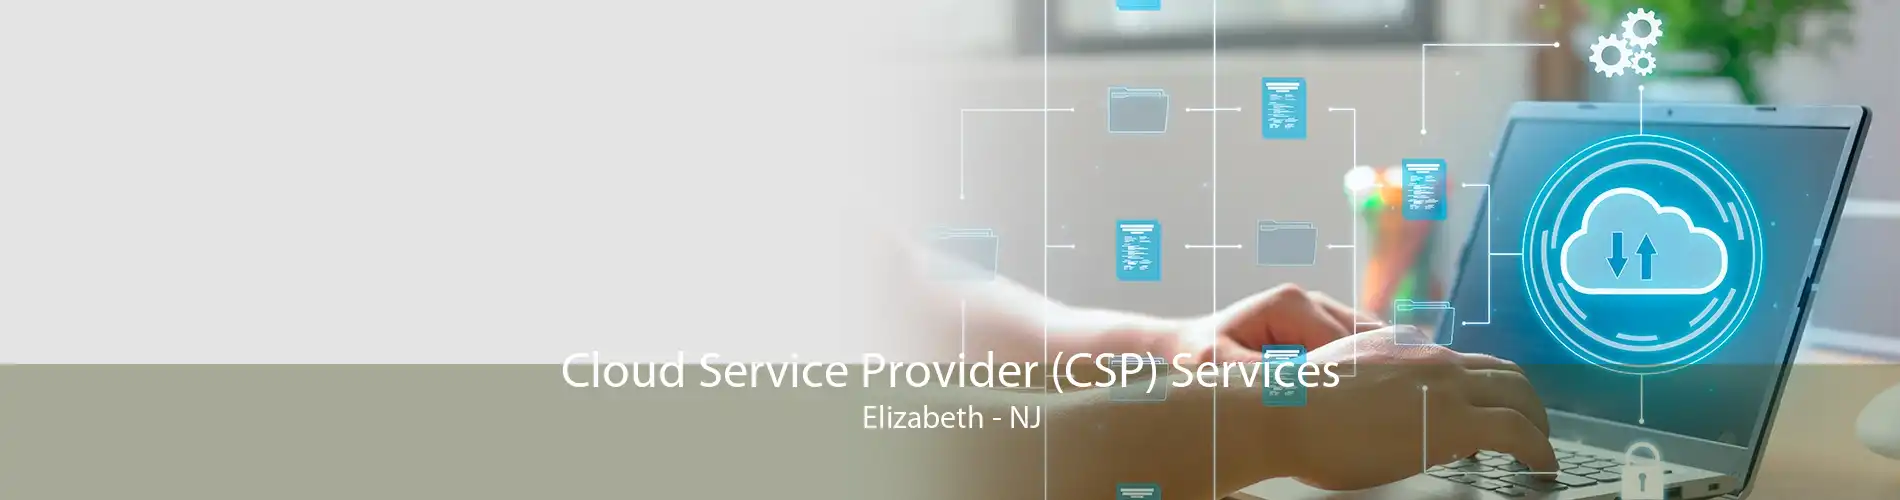 Cloud Service Provider (CSP) Services Elizabeth - NJ